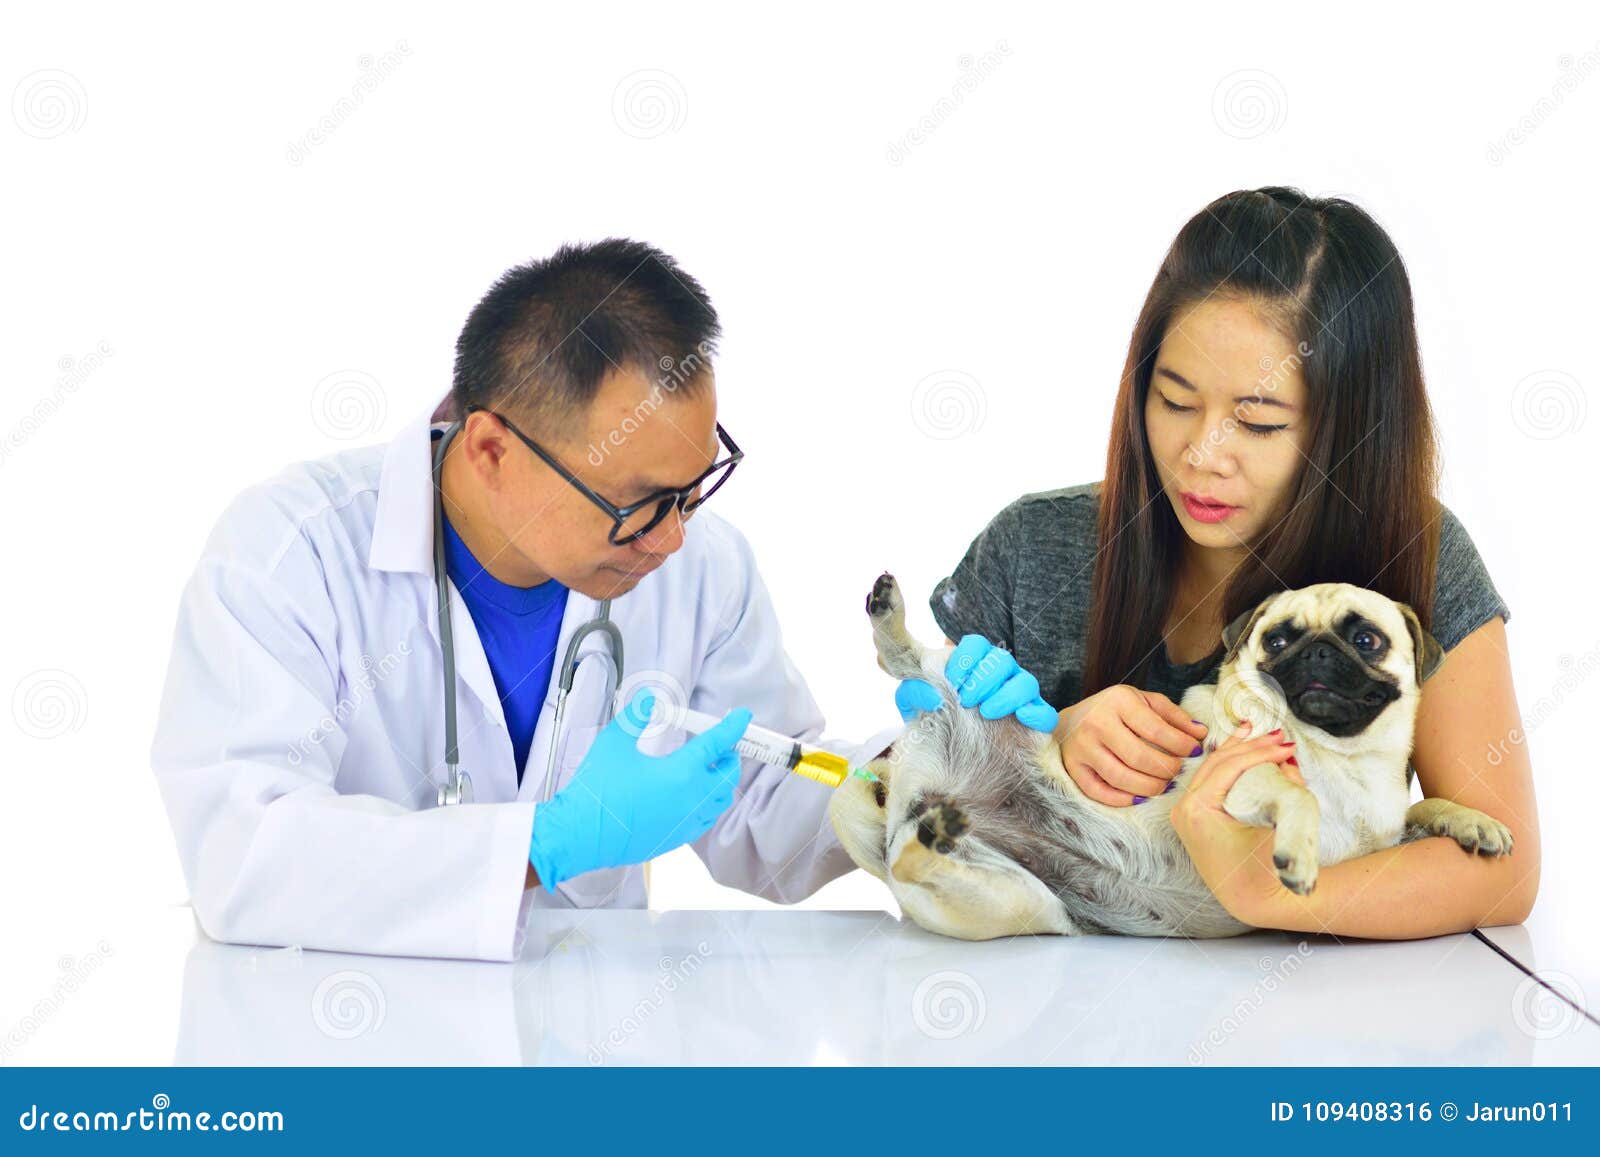 rabies vaccine injection